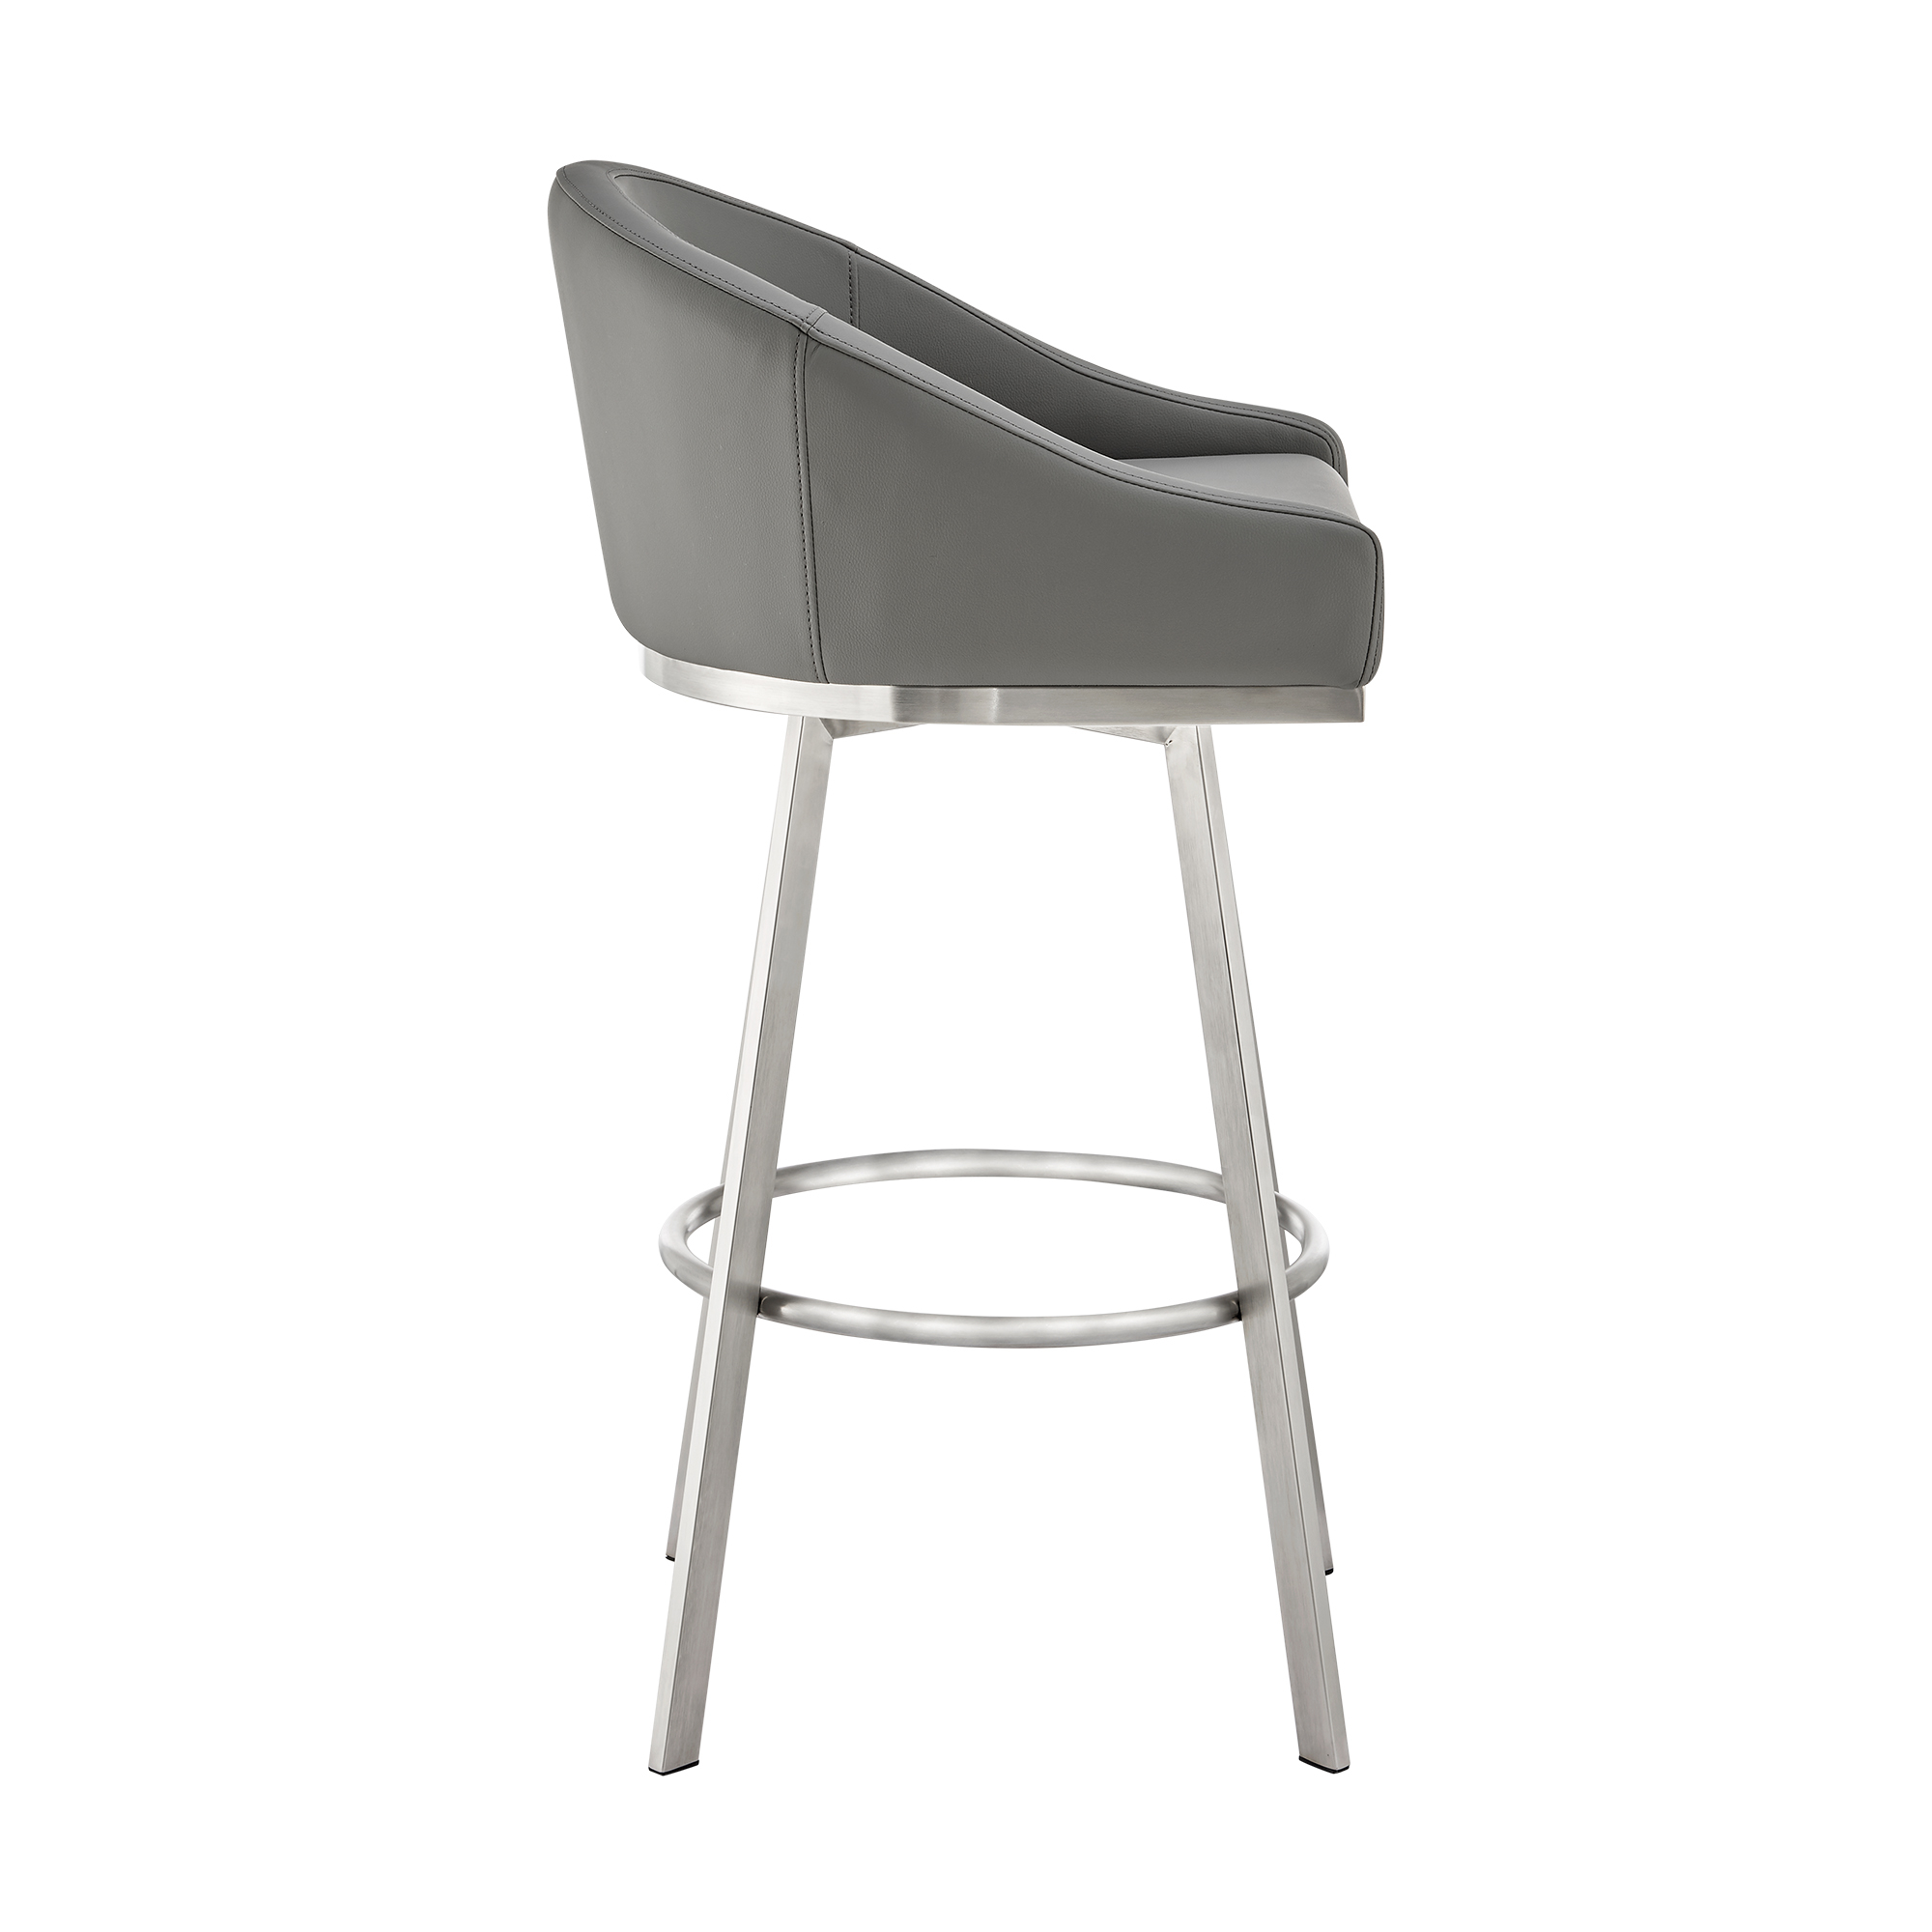 Sheryl 30 Inch Metal Swivel Bar Stool Chair, Low Back, Gray Faux Leather- Saltoro Sherpi